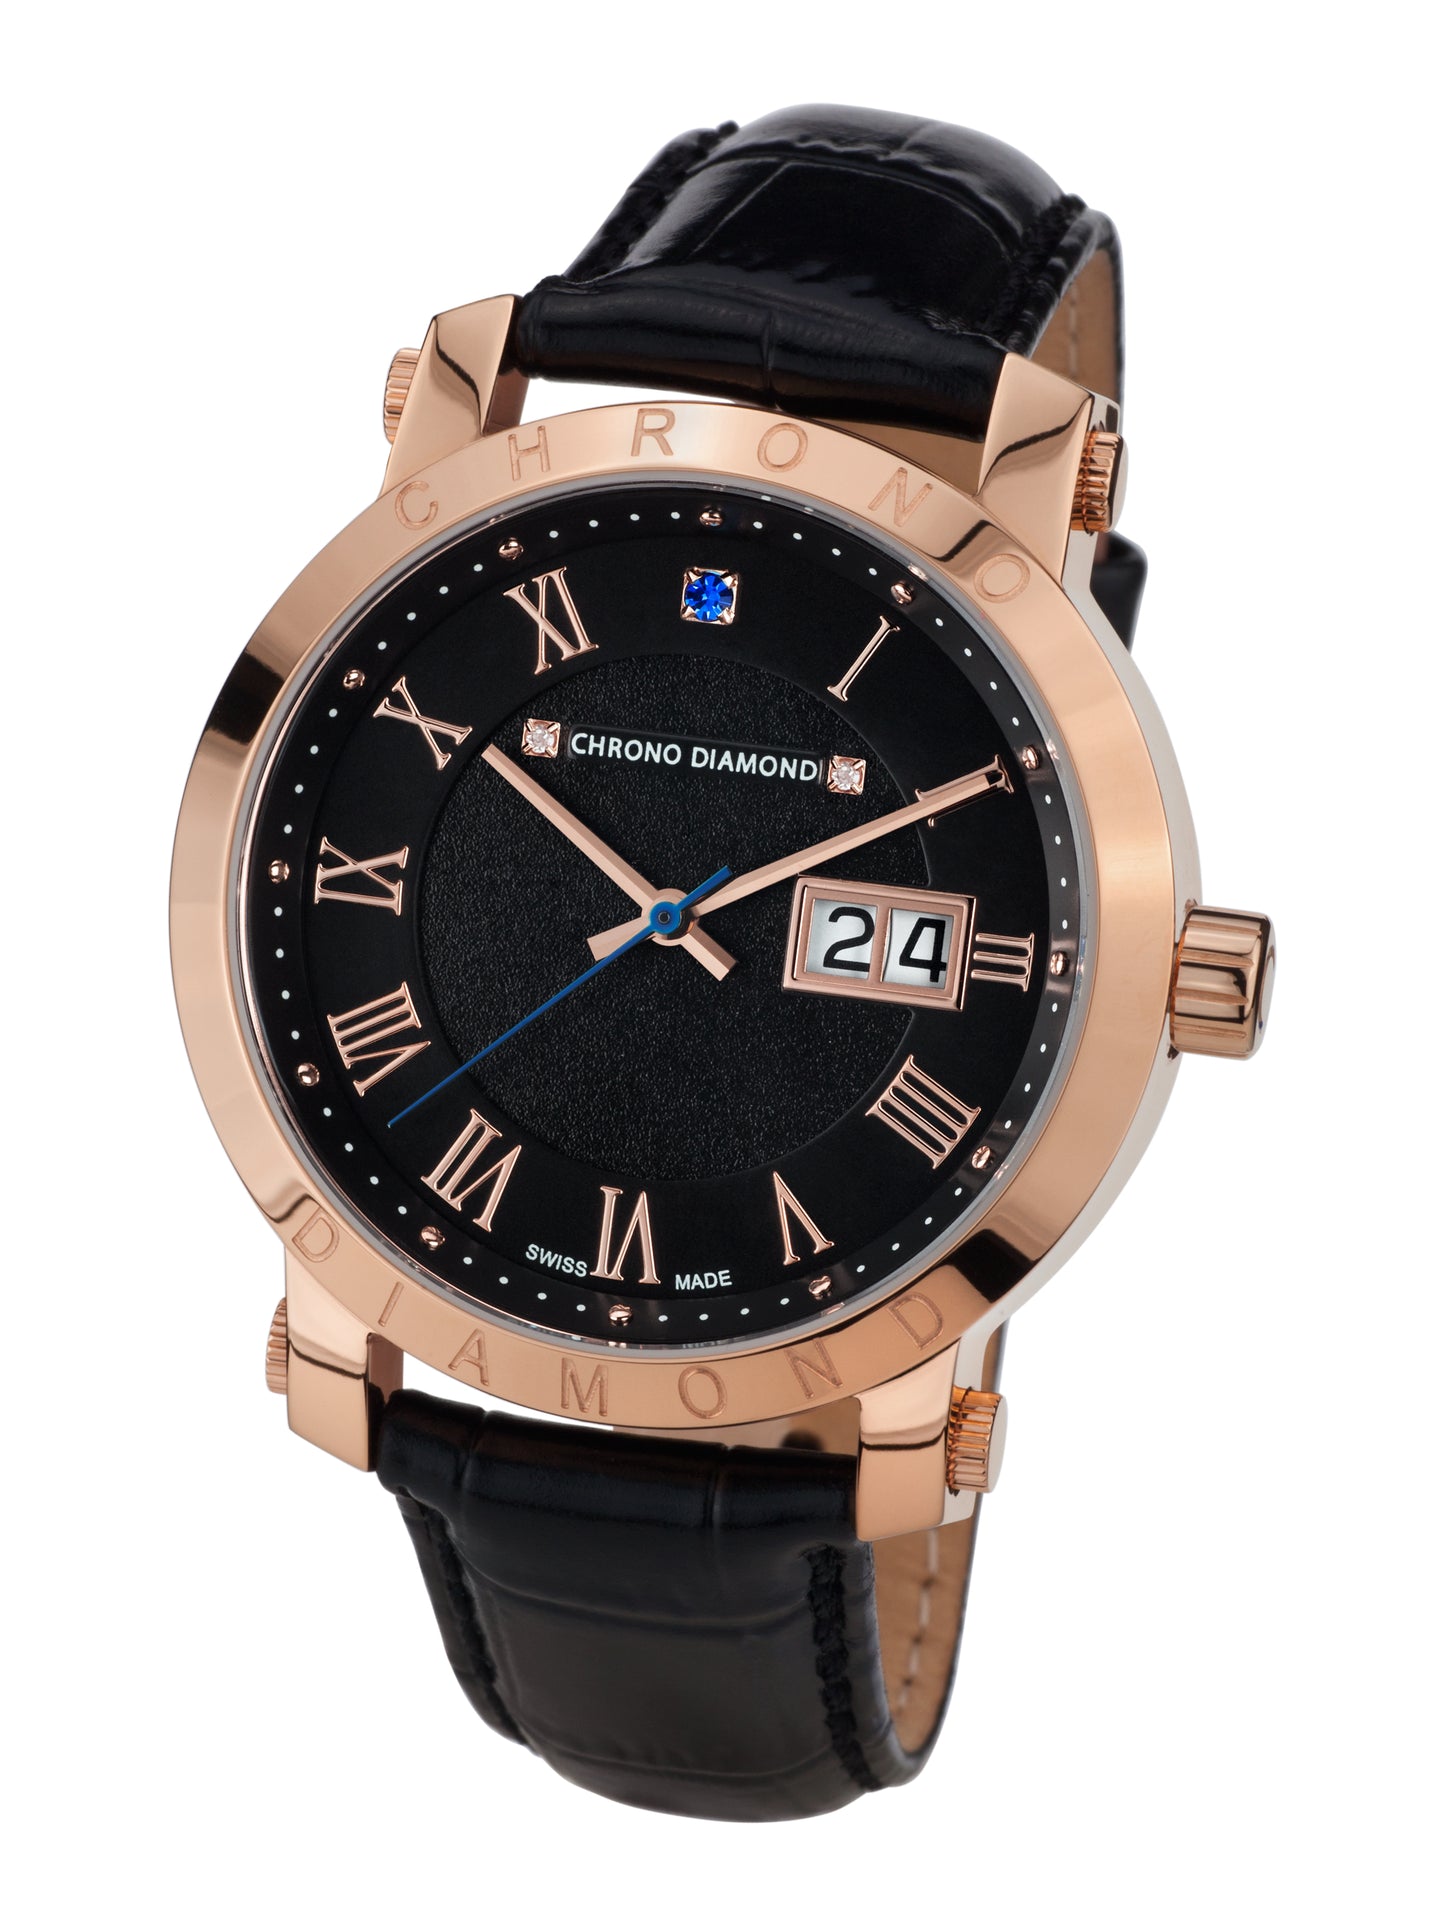 Automatic watches — Nestorius — Chrono Diamond — rosegold IP leather